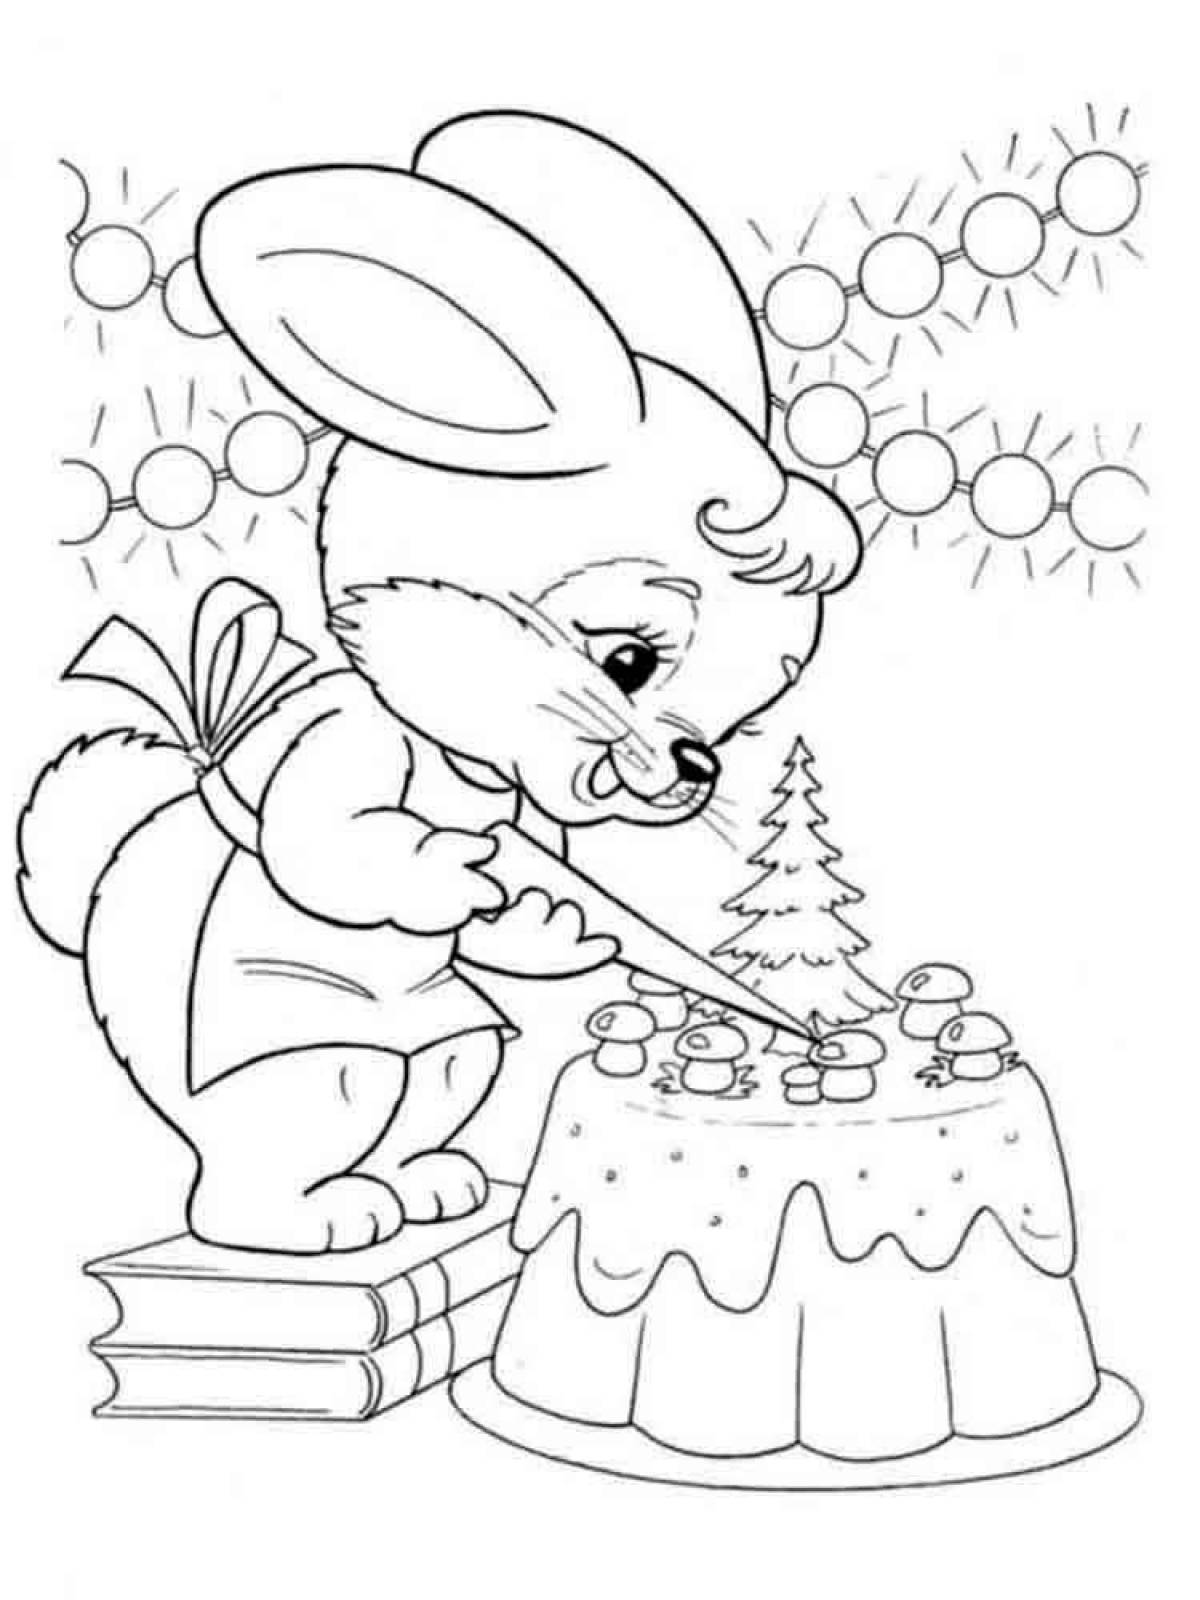 Brilliant coloring rabbit new year